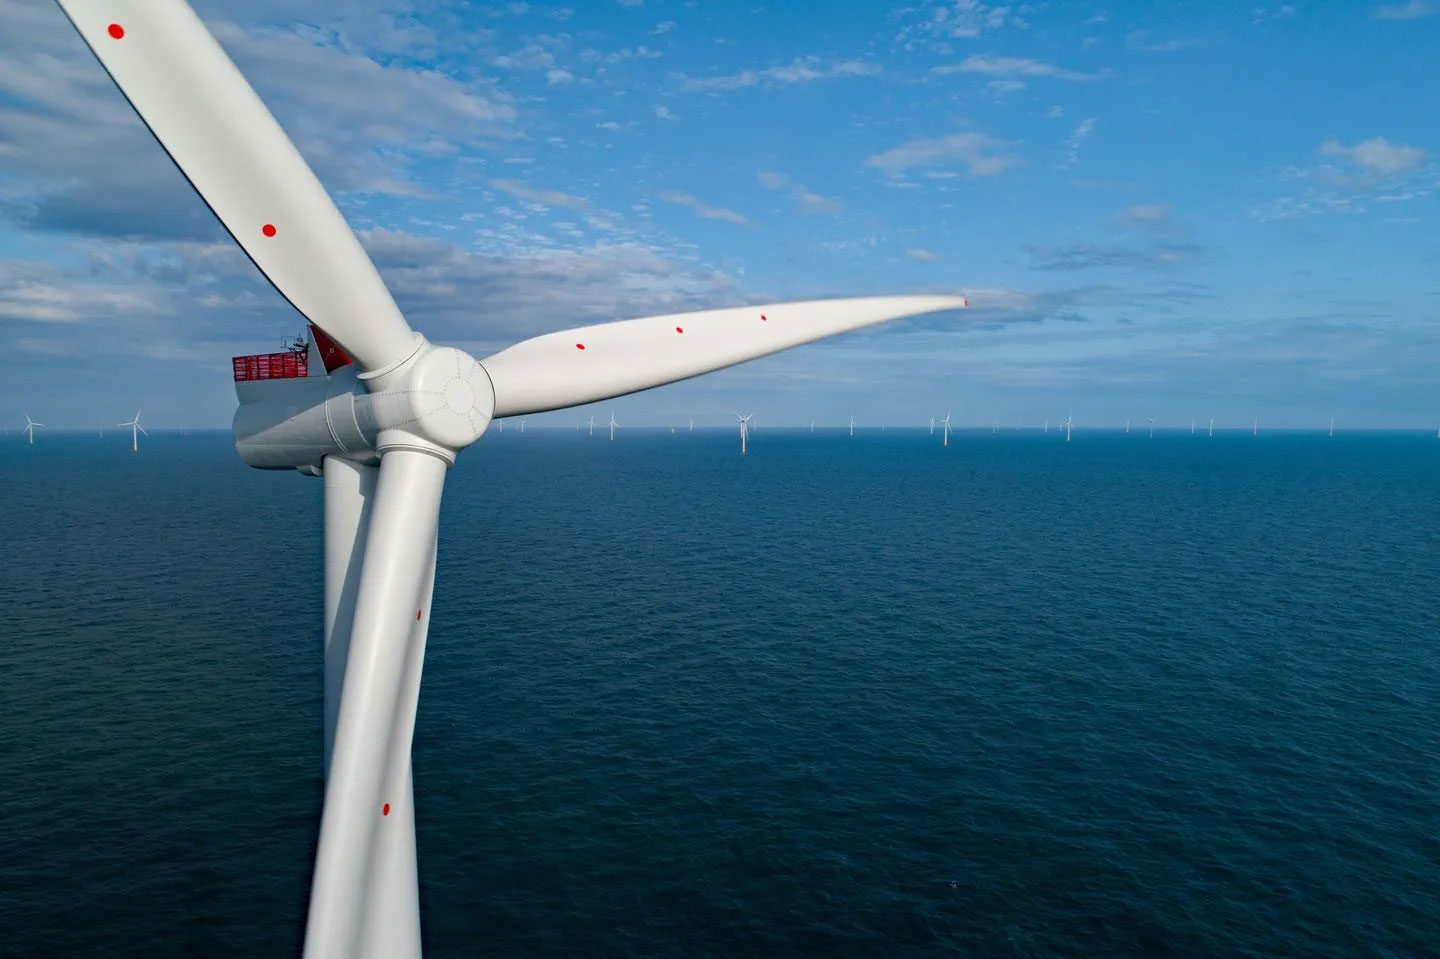 Company Image (Ørsted: Offshore wind turbine)